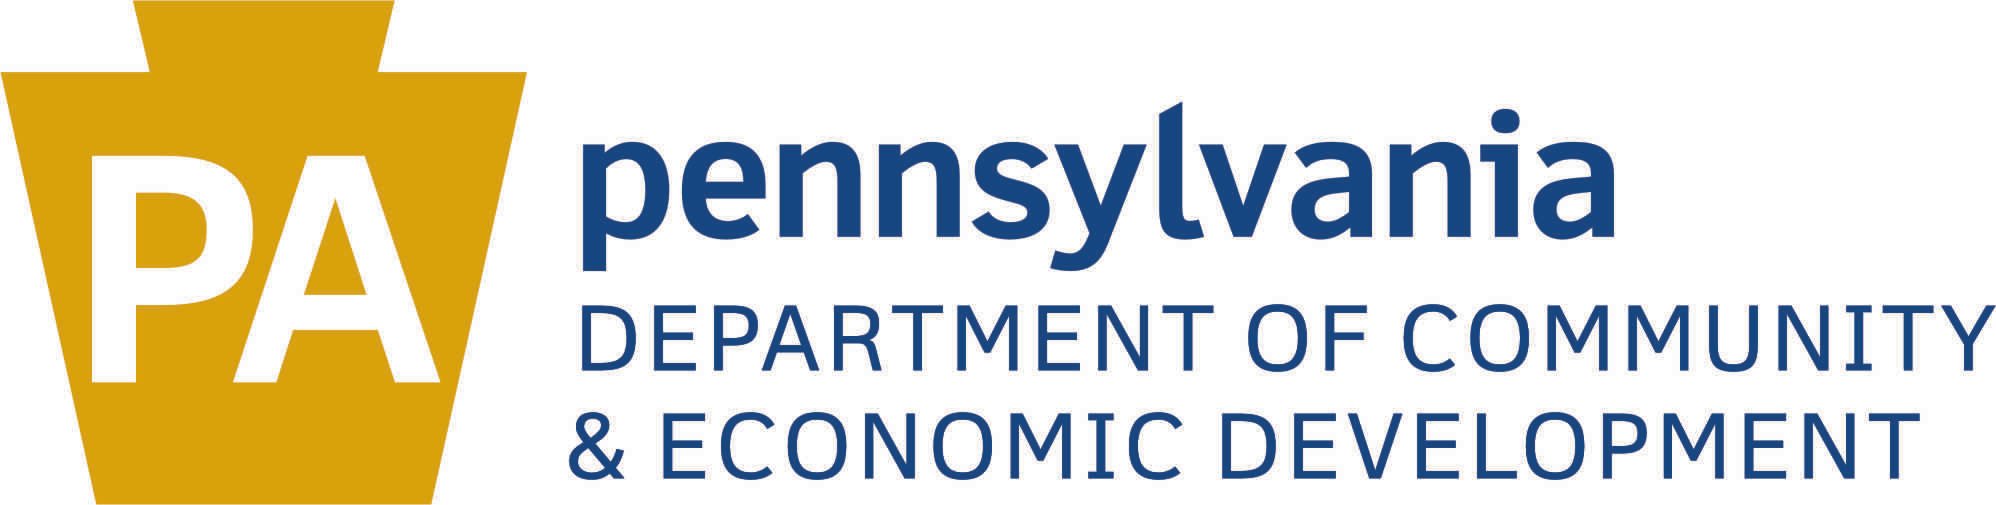 Department of community & economic development of Pennsylvania